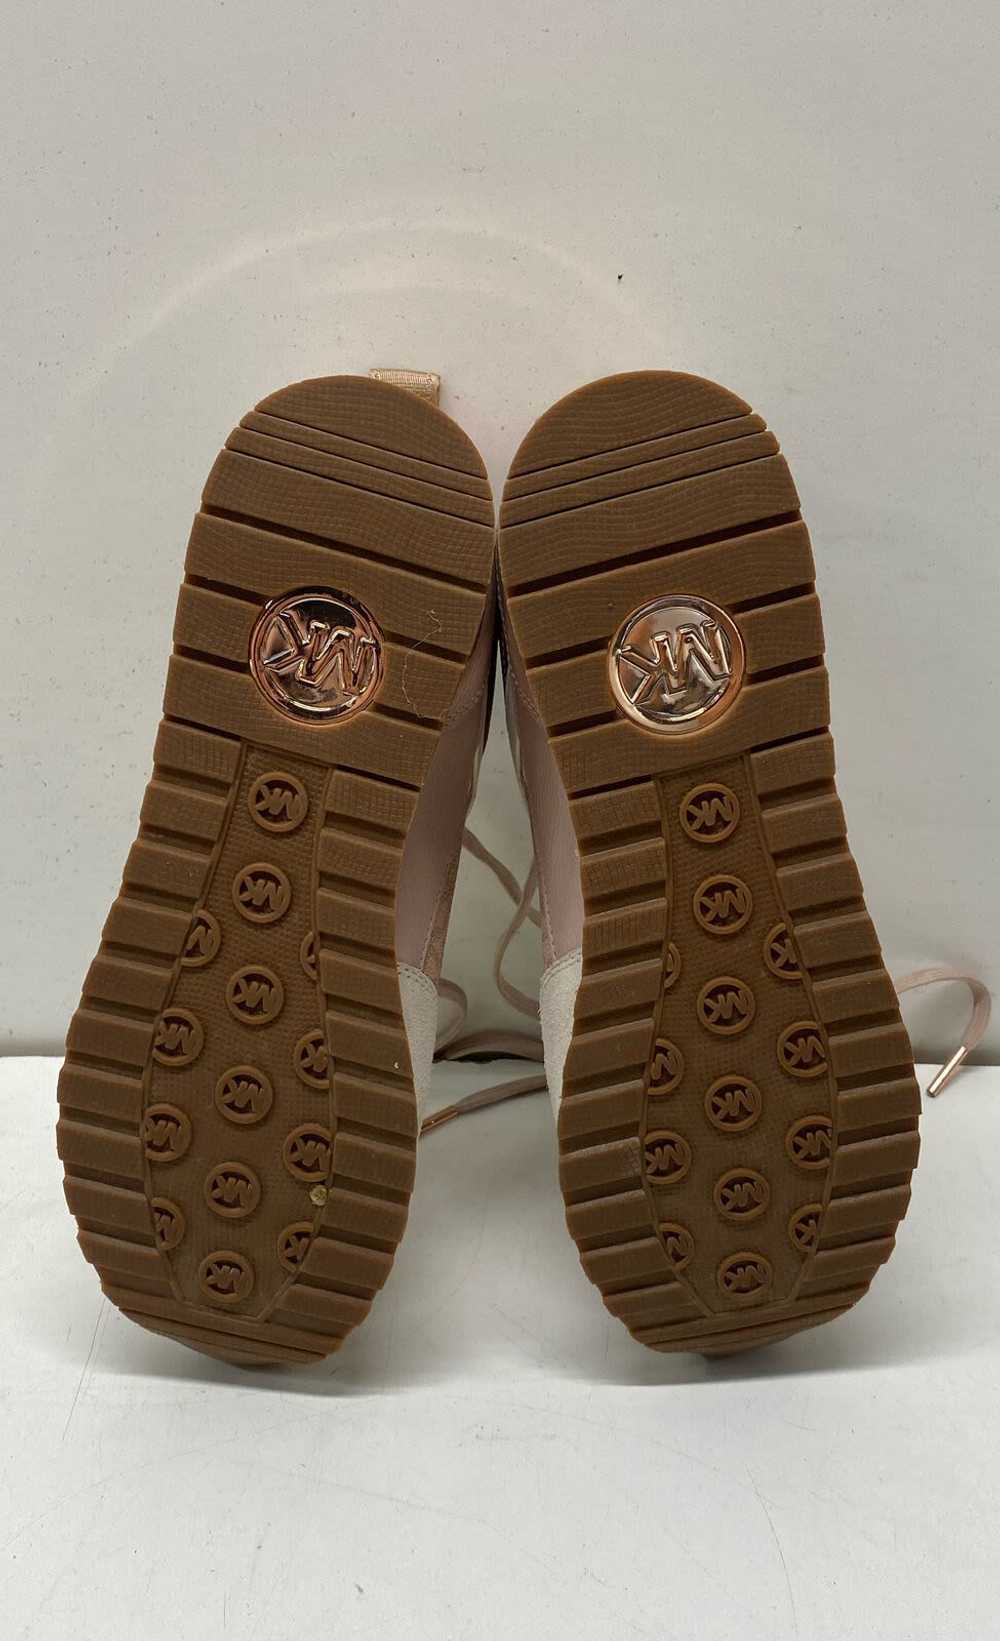 Michael Kors Wilma Monogram Sneakers Light Pink 8 - image 6